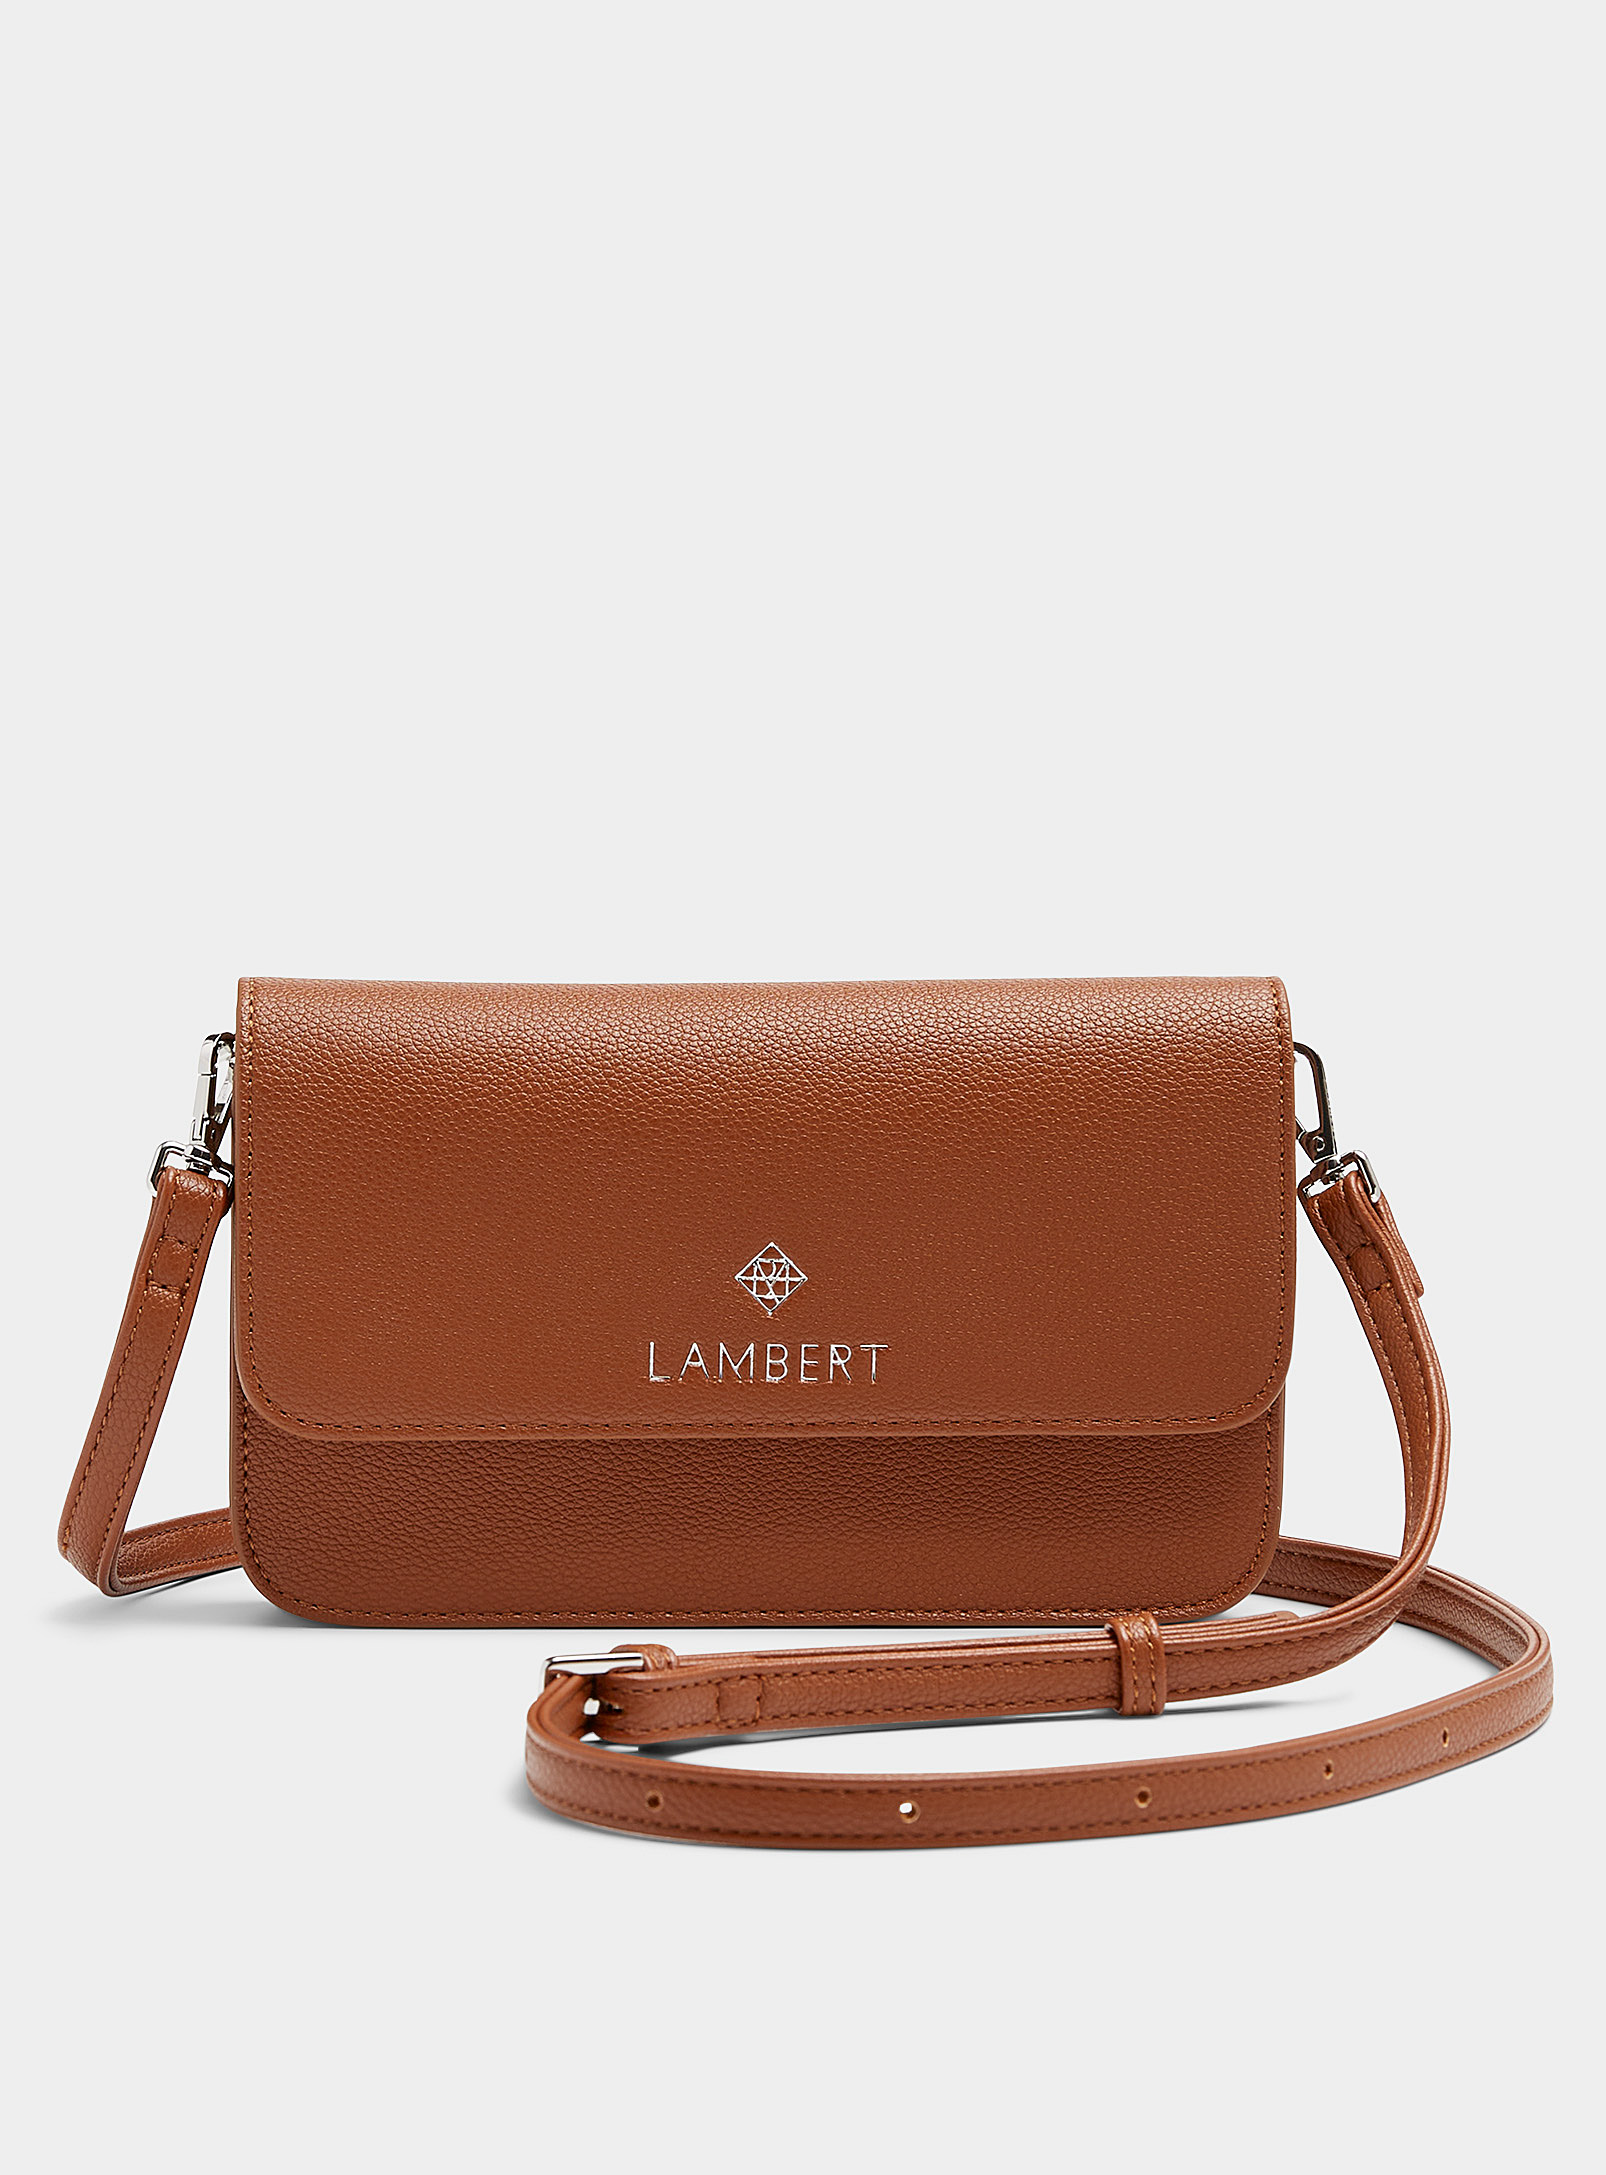 Lambert Gabrielle 4-in-1 Flap Bag In Brown